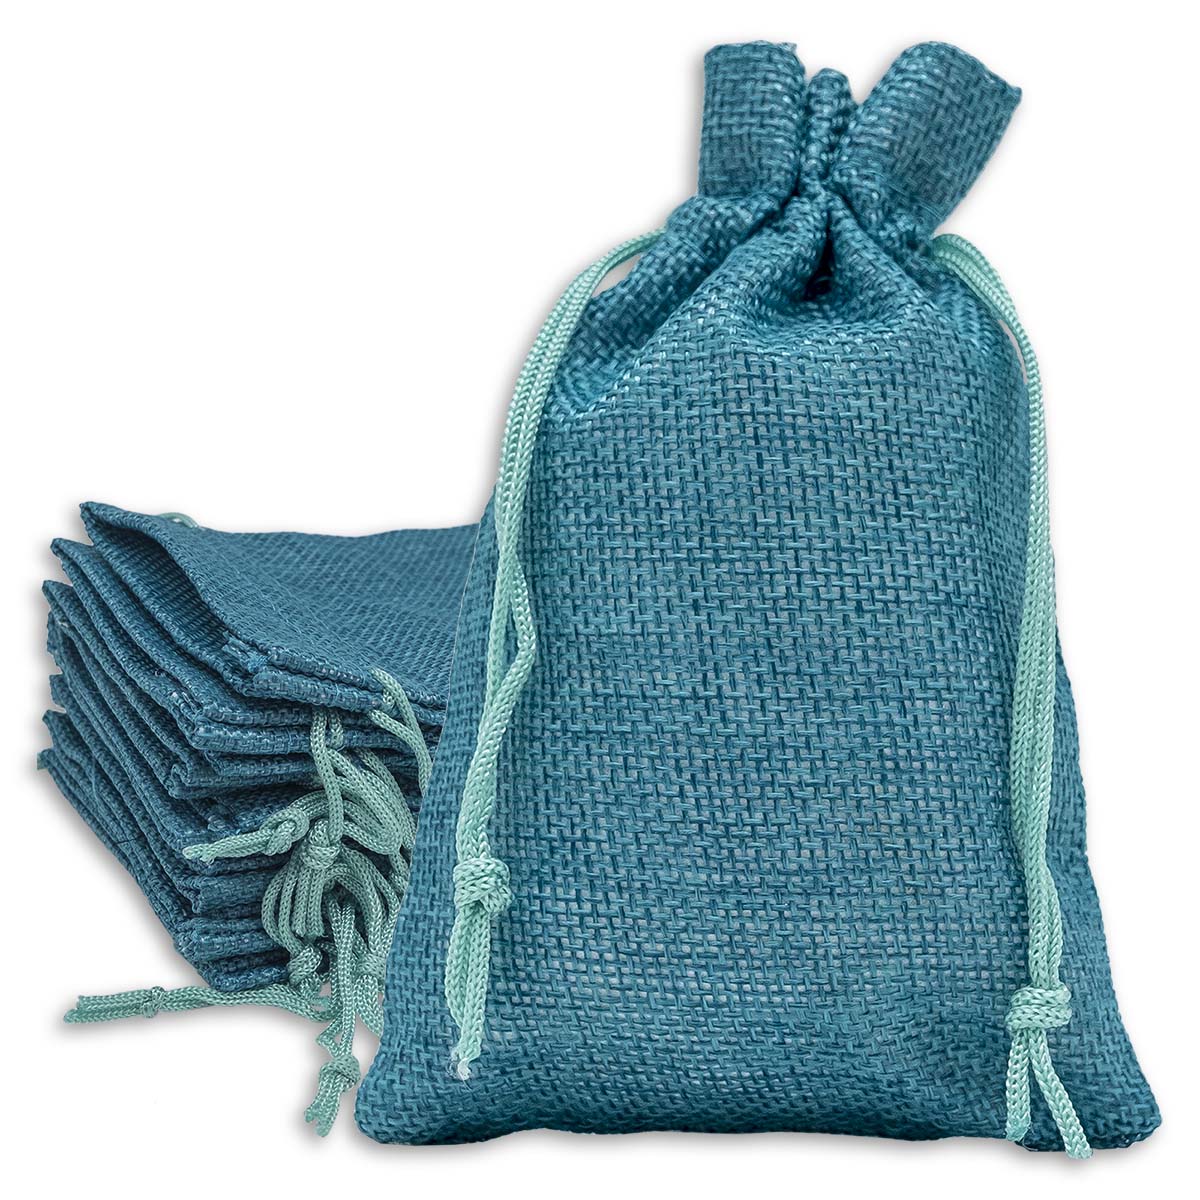 5 1/2" x 7 3/4" Teal Blue Linen Burlap Drawstring Gift Bags